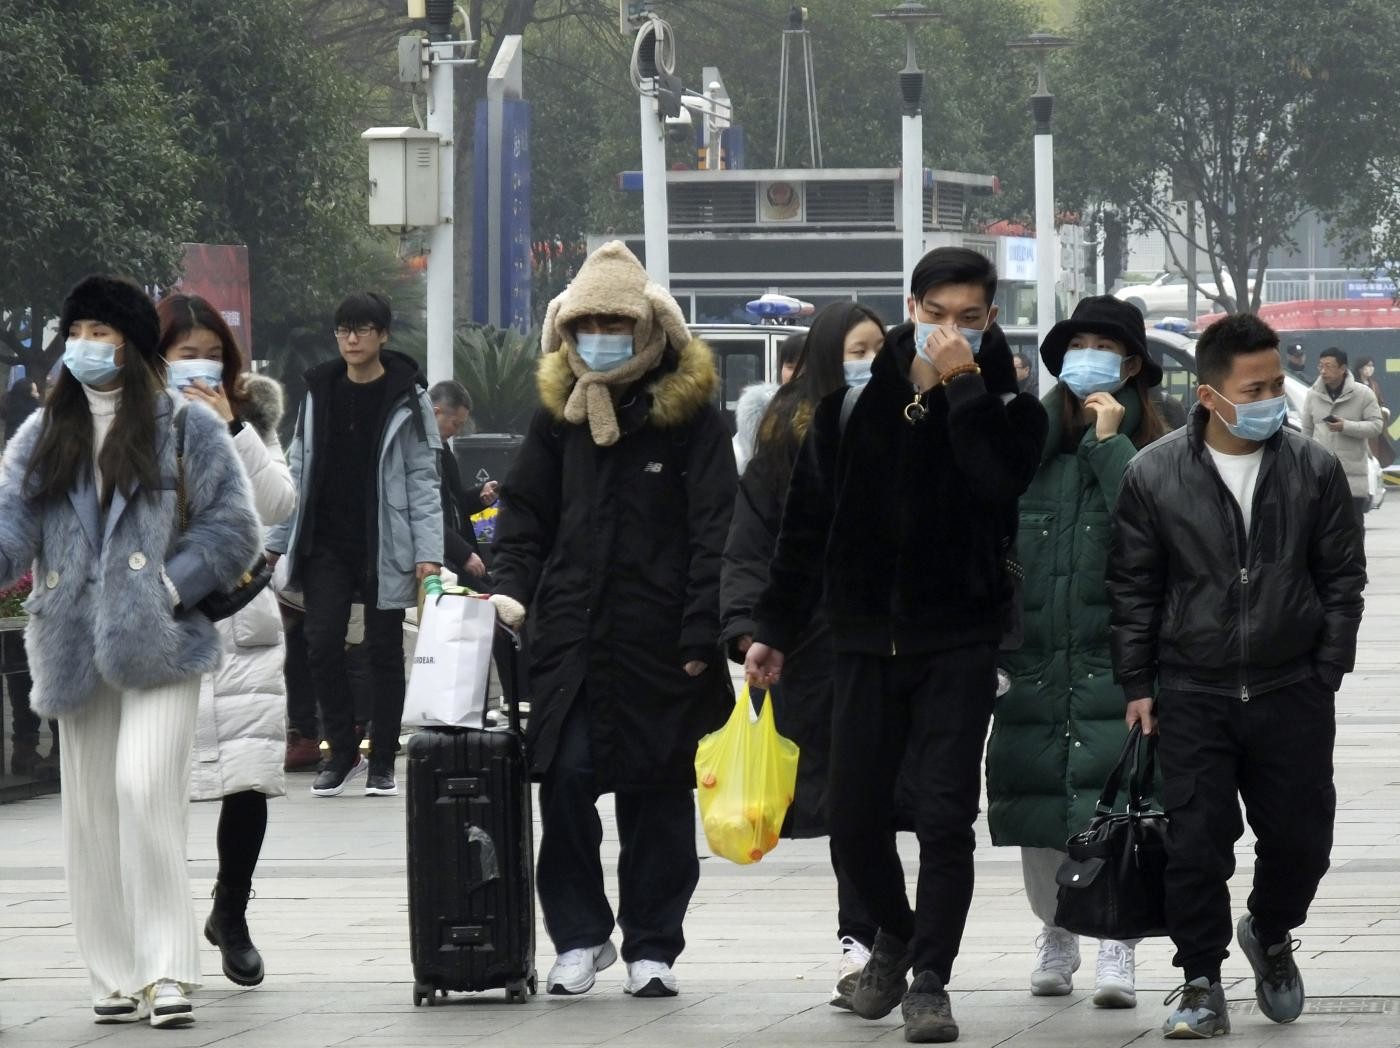 Virus cinese, Cnn: “Primo contagio negli Usa”